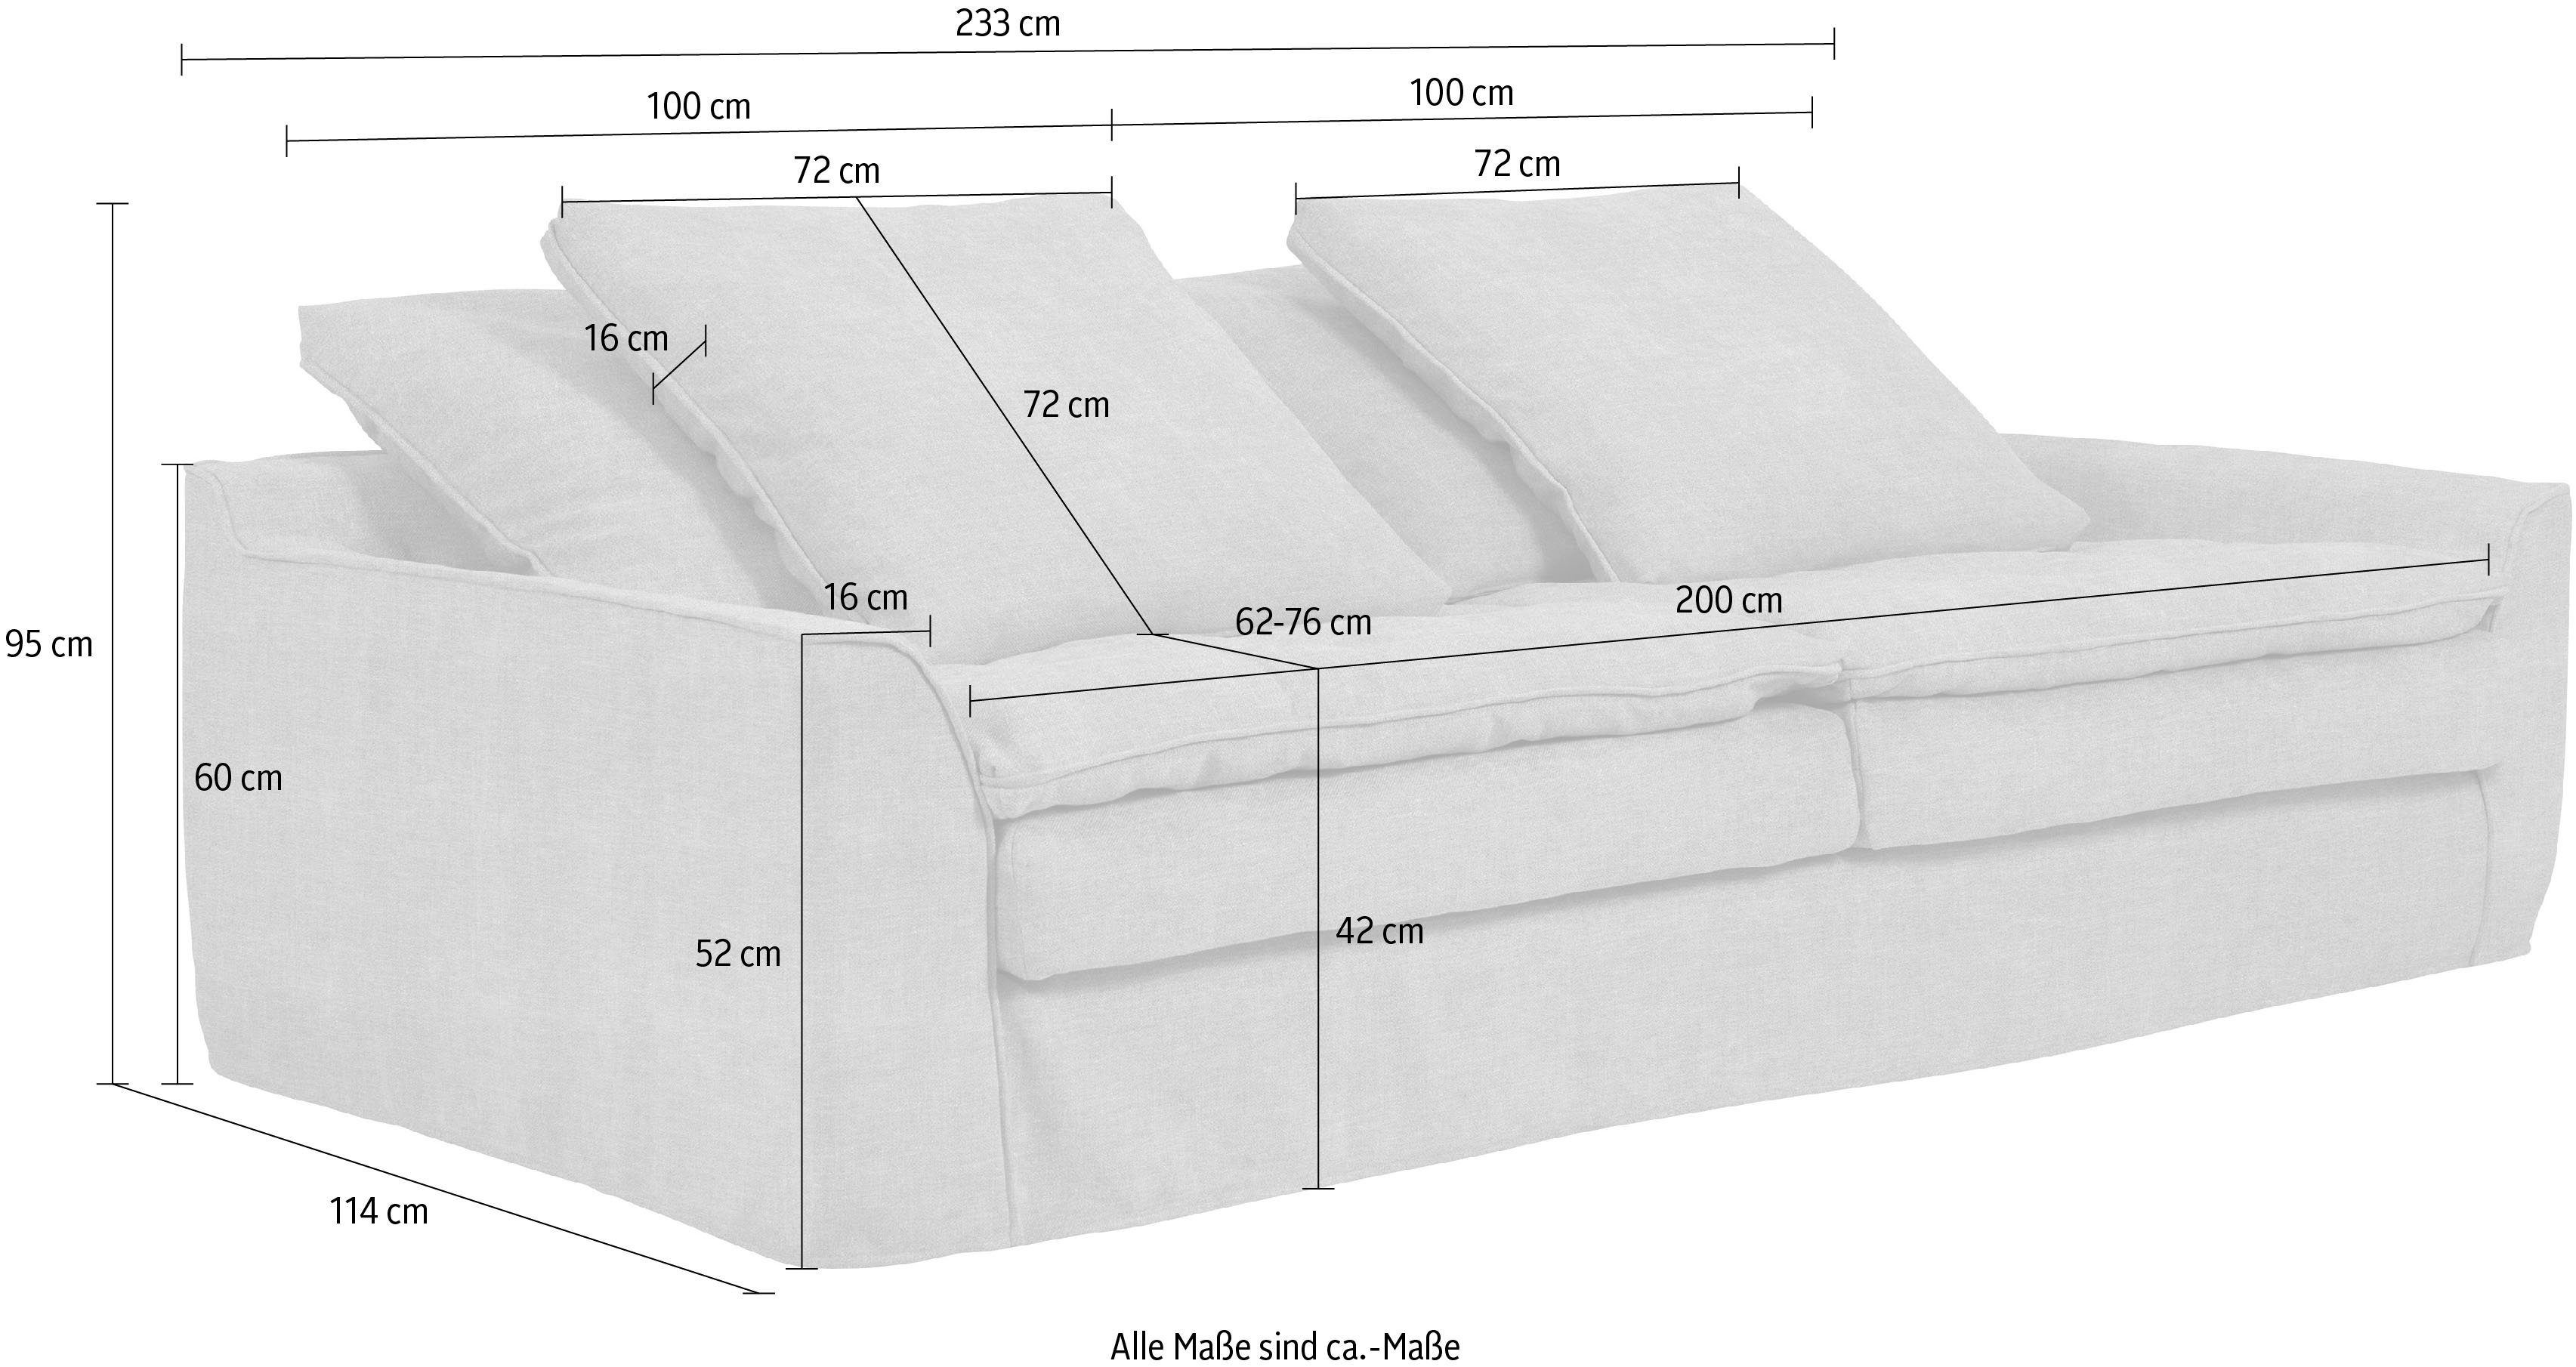 Big-Sofa Kissen, abnehmbarer waschbarer Hussenbezug furninova 4 Sake, inklusive und